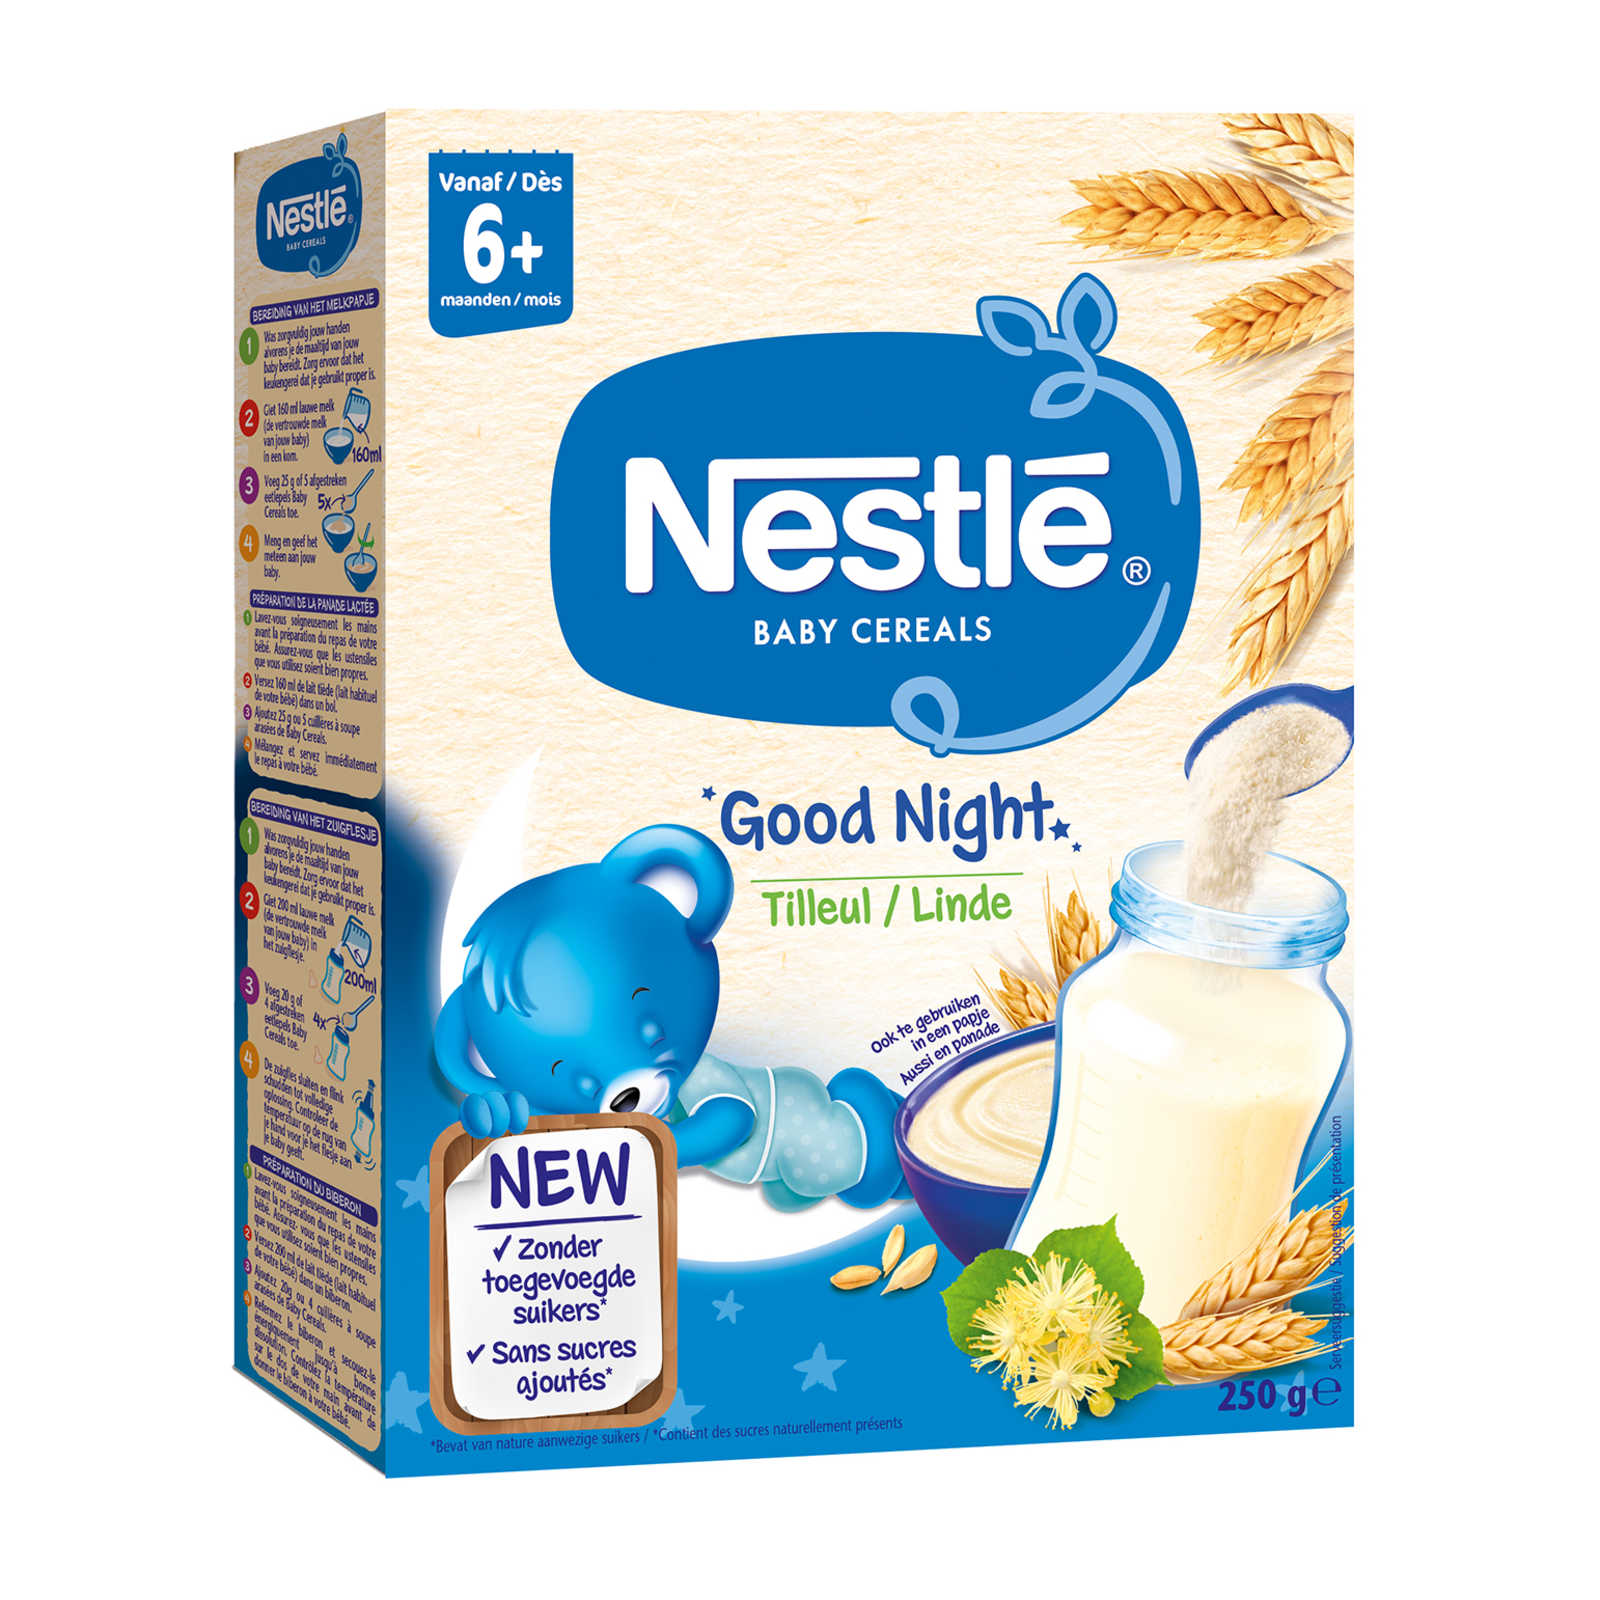 Nestlé-Baby Cereals